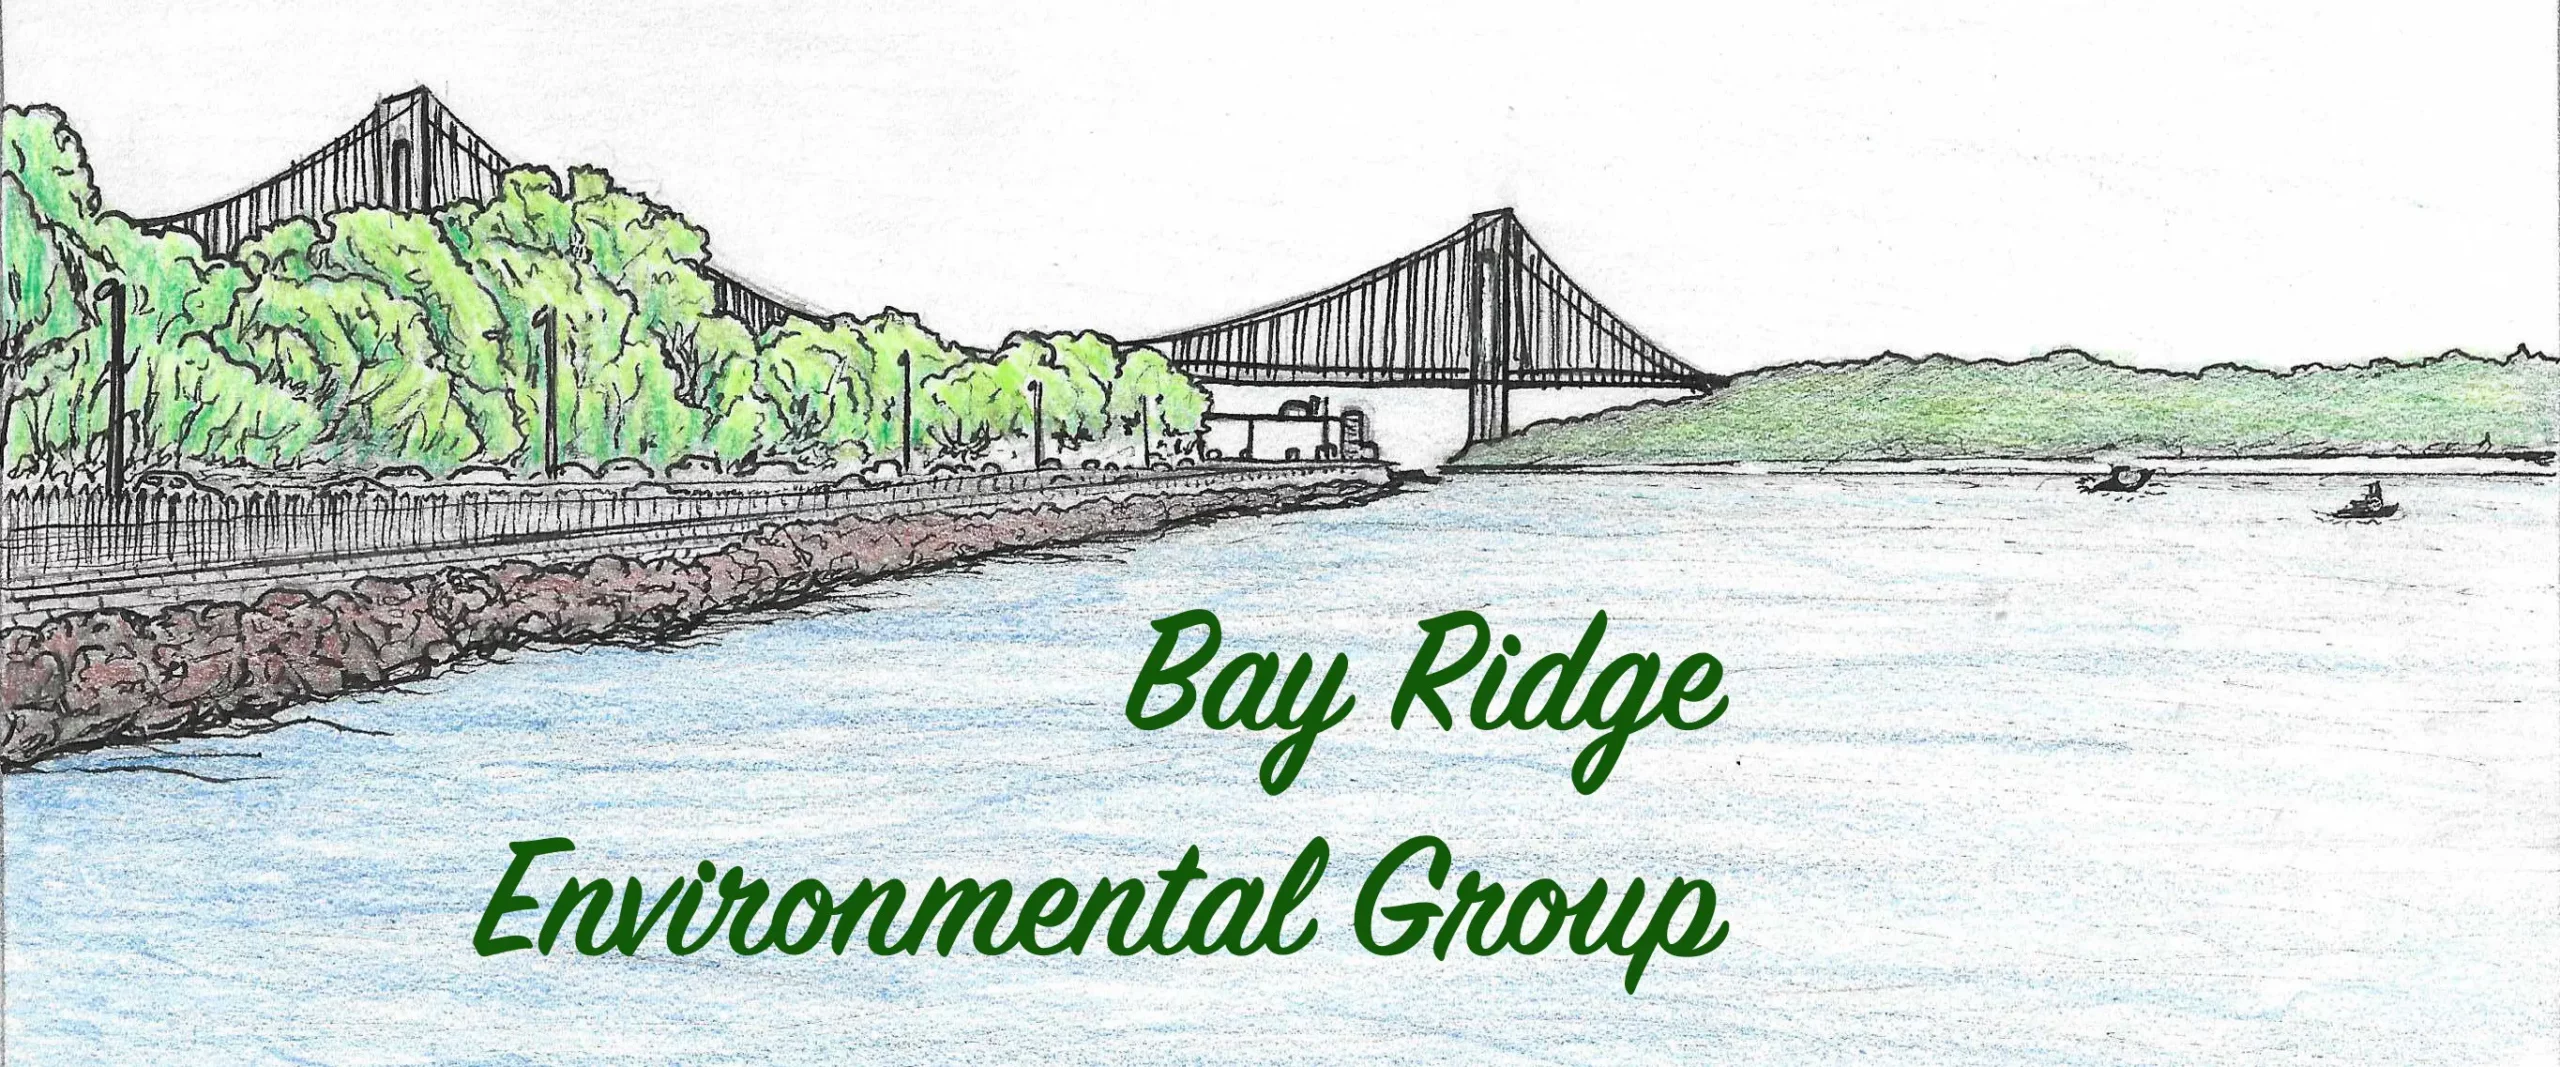 The logo for the Bay Ridge Environmental Group